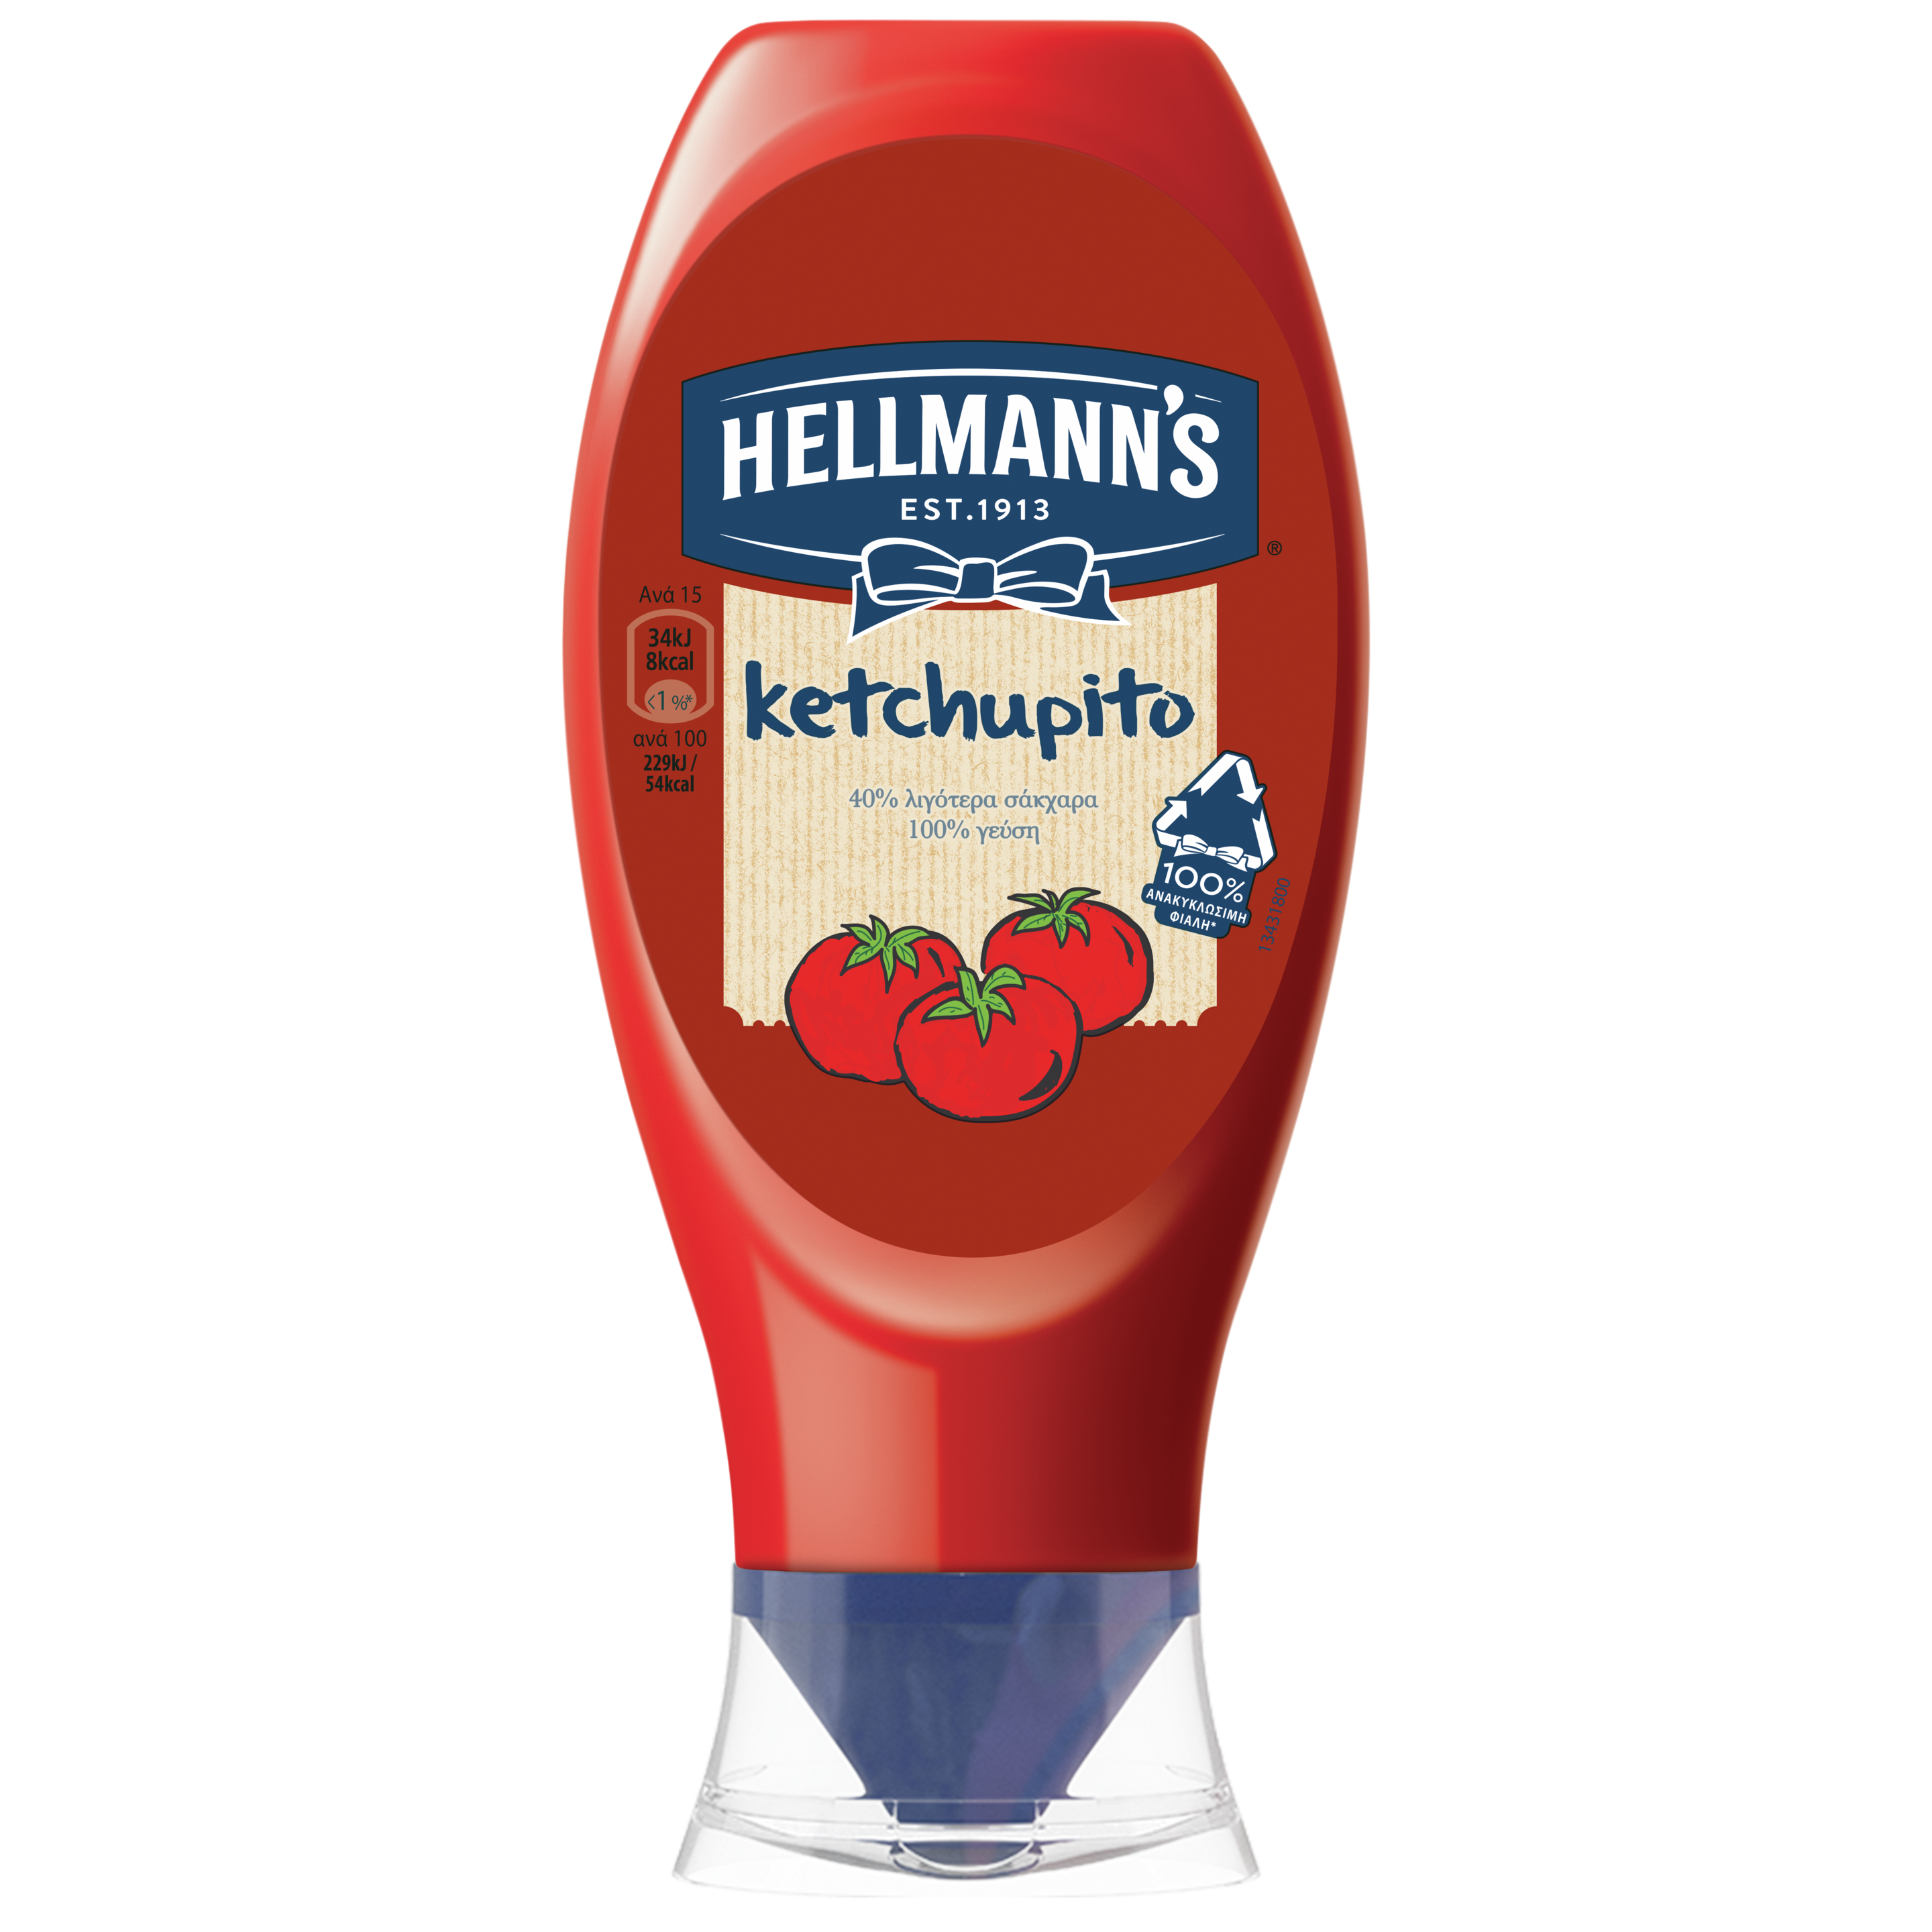 Hellmann's Ketchupito